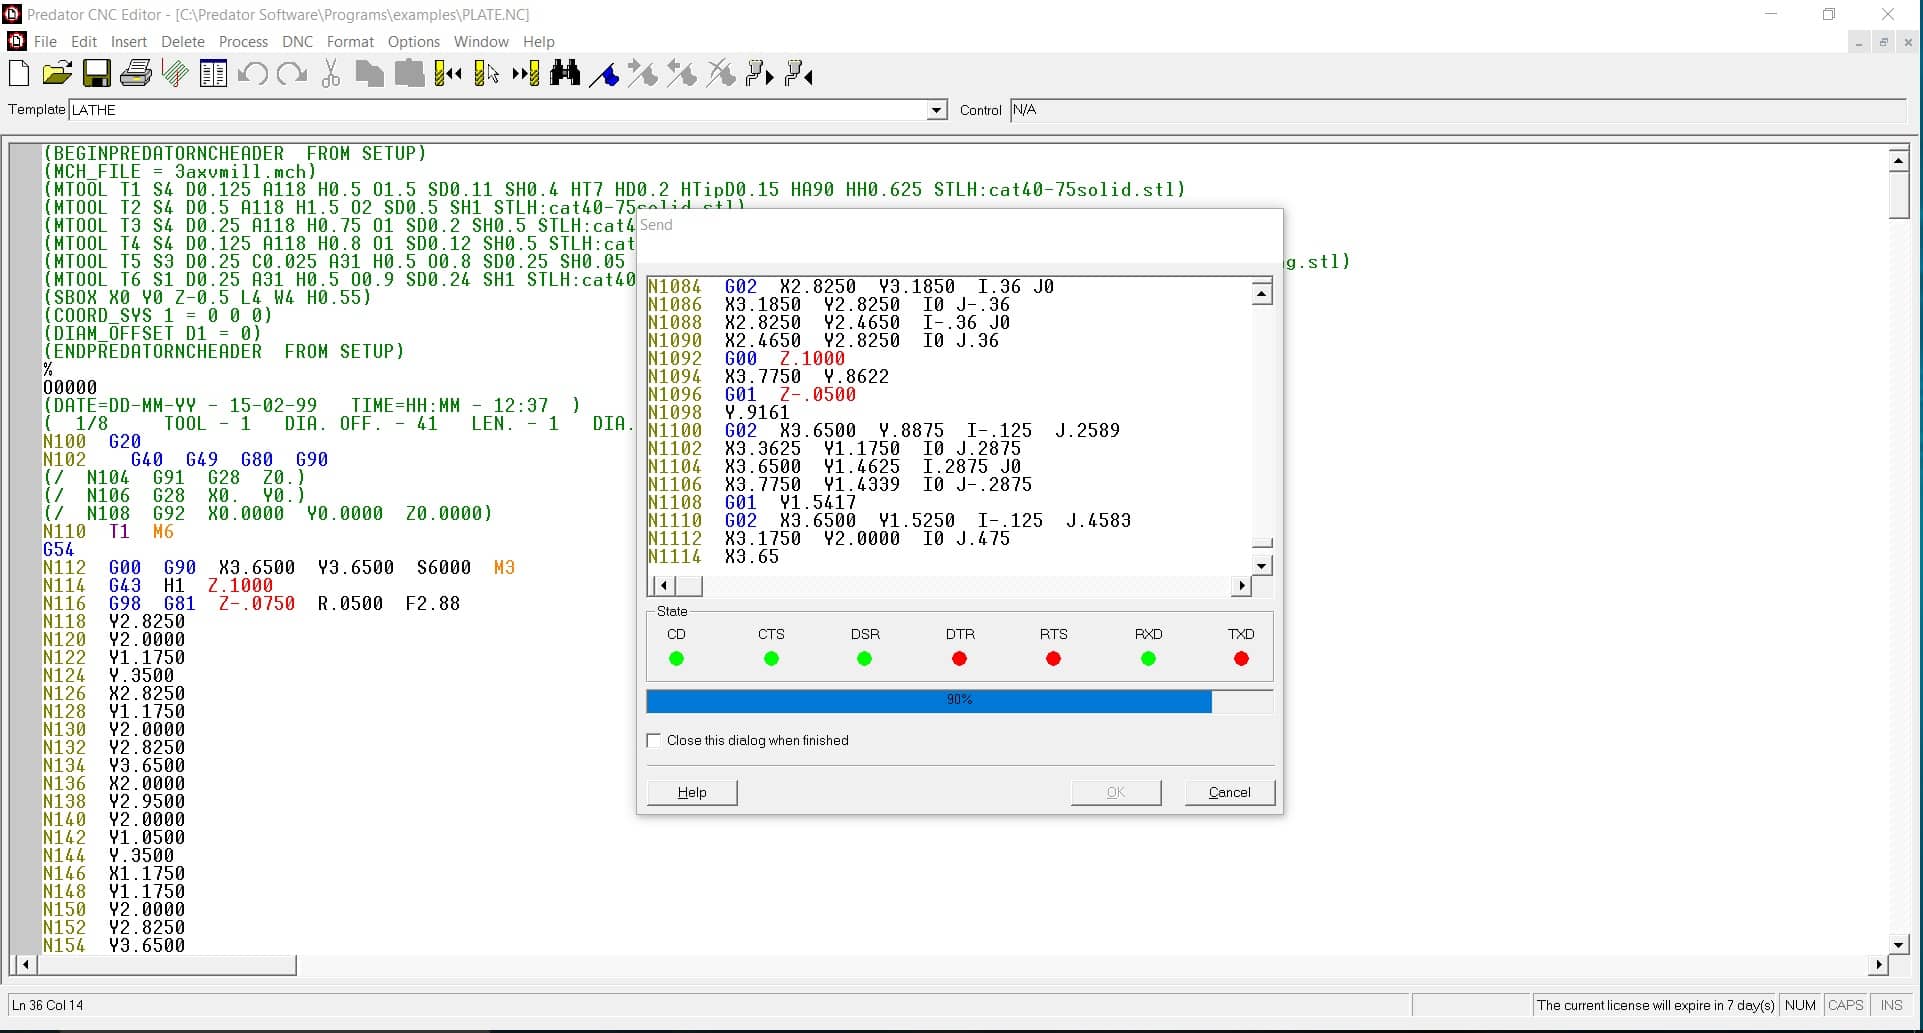 A screenshot of Predator CNC G-code Editor Express, showing the program actively sending code.